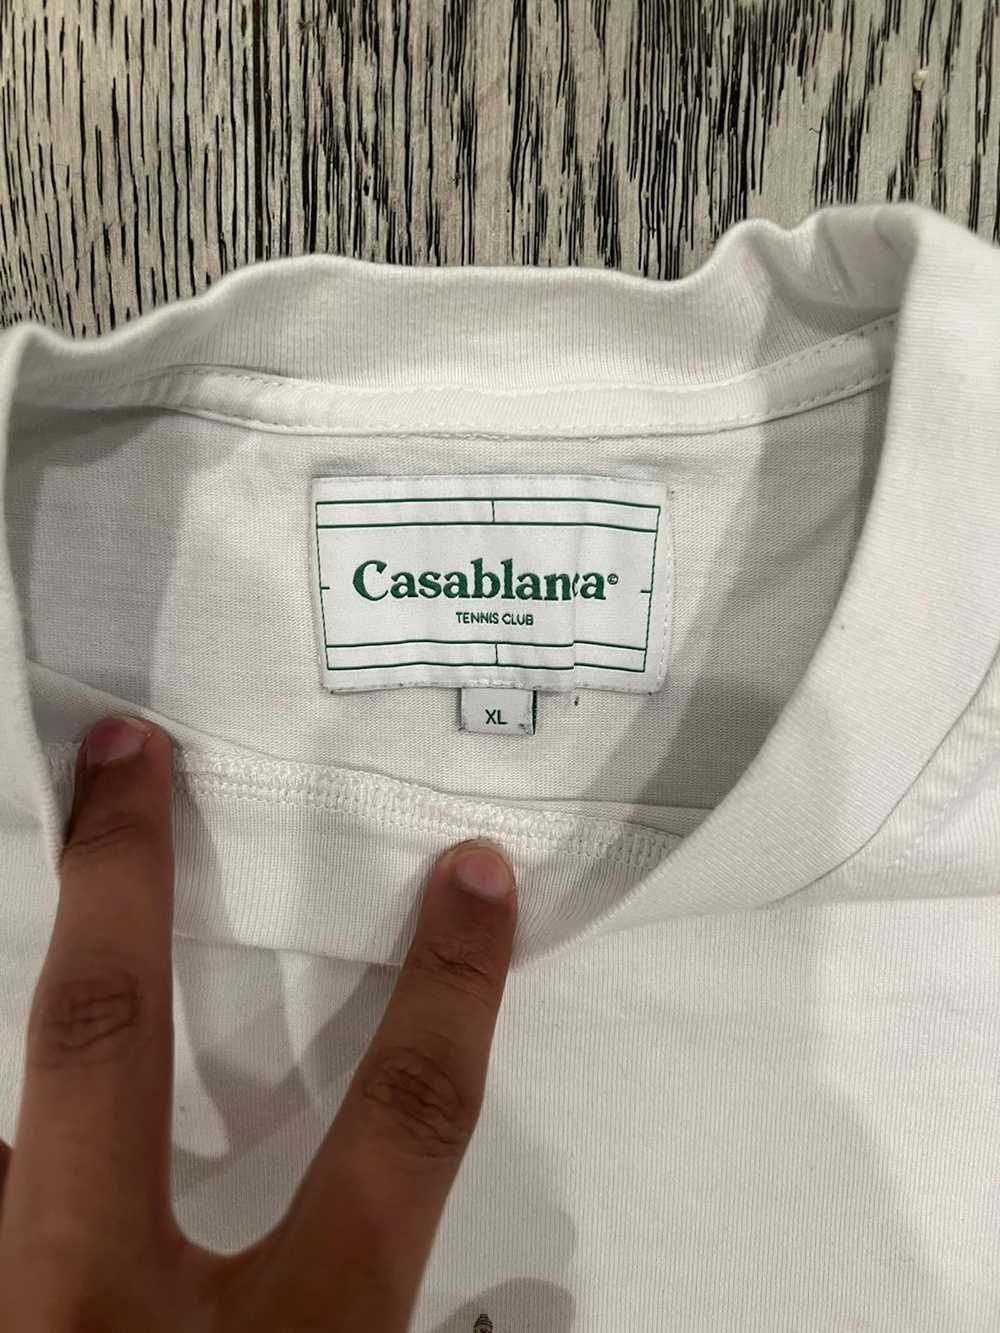 Casablanca Casablanca Tennis Club Shirt - image 4